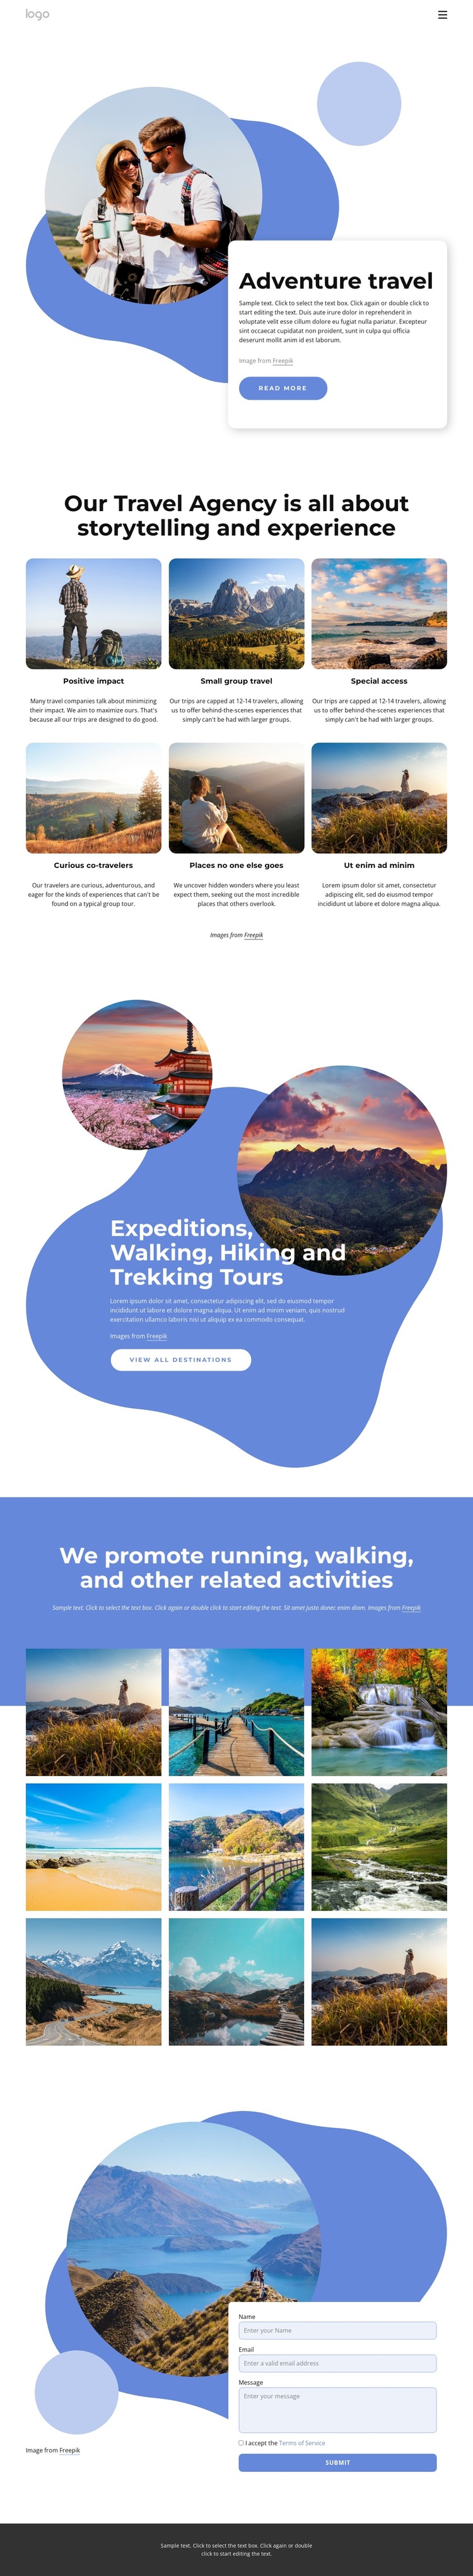 Agency specializing in luxury adventure travel Joomla Page Builder